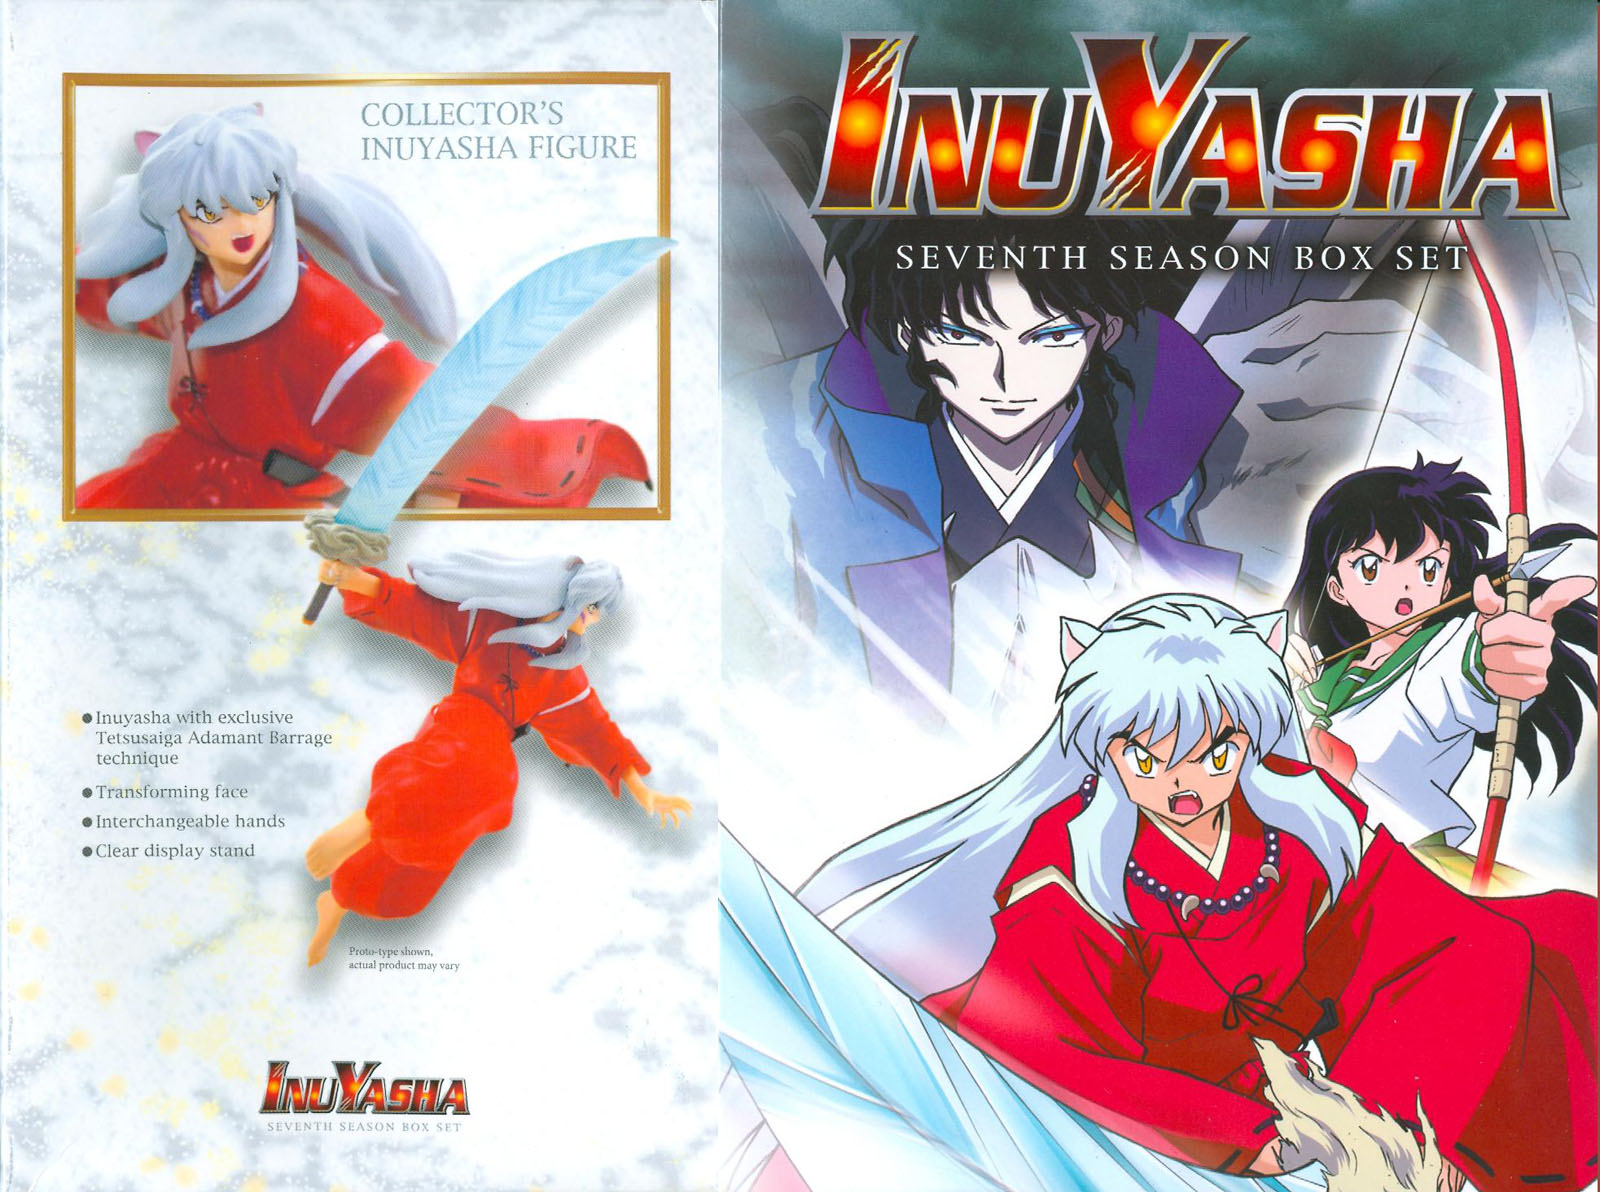 Inuyasha - Secrets Of The Past (Vol. 7) (2003) DVD – Voluptuous Vinyl  Records